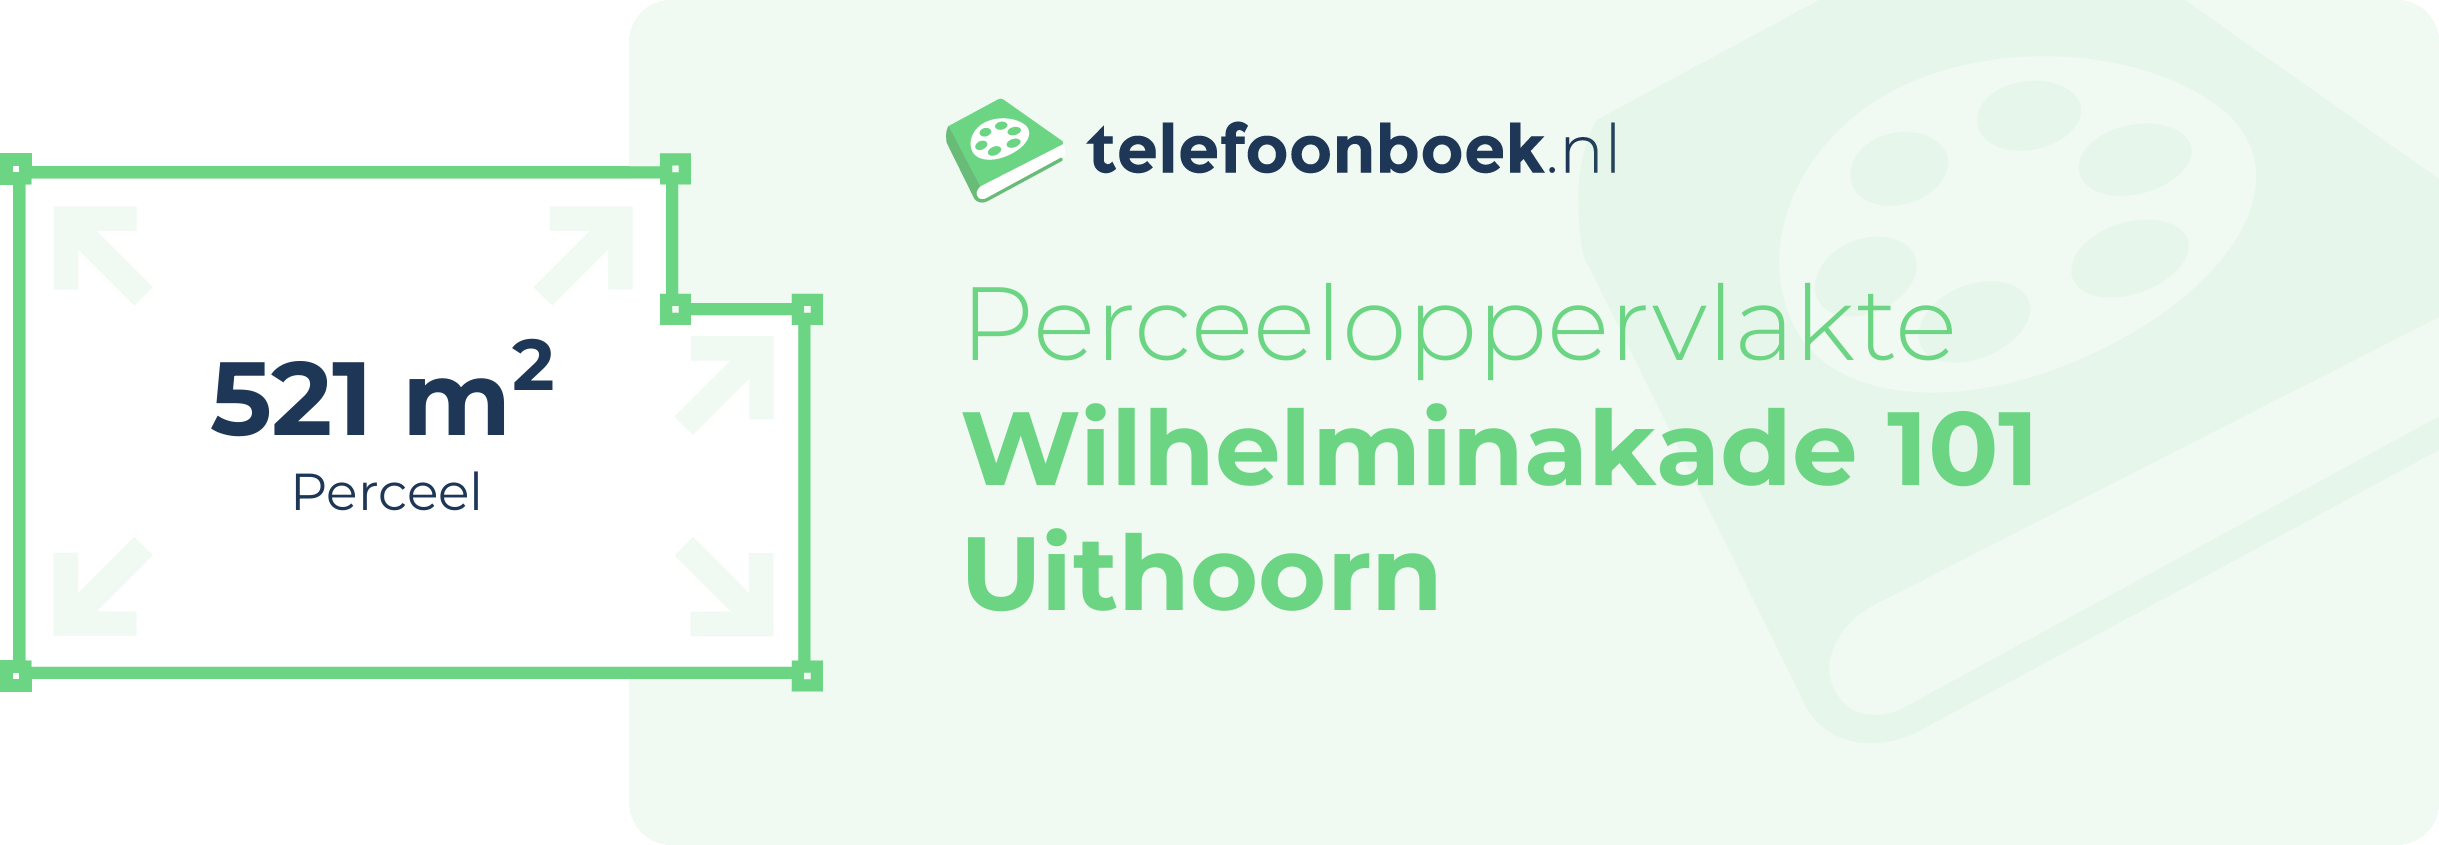 Perceeloppervlakte Wilhelminakade 101 Uithoorn